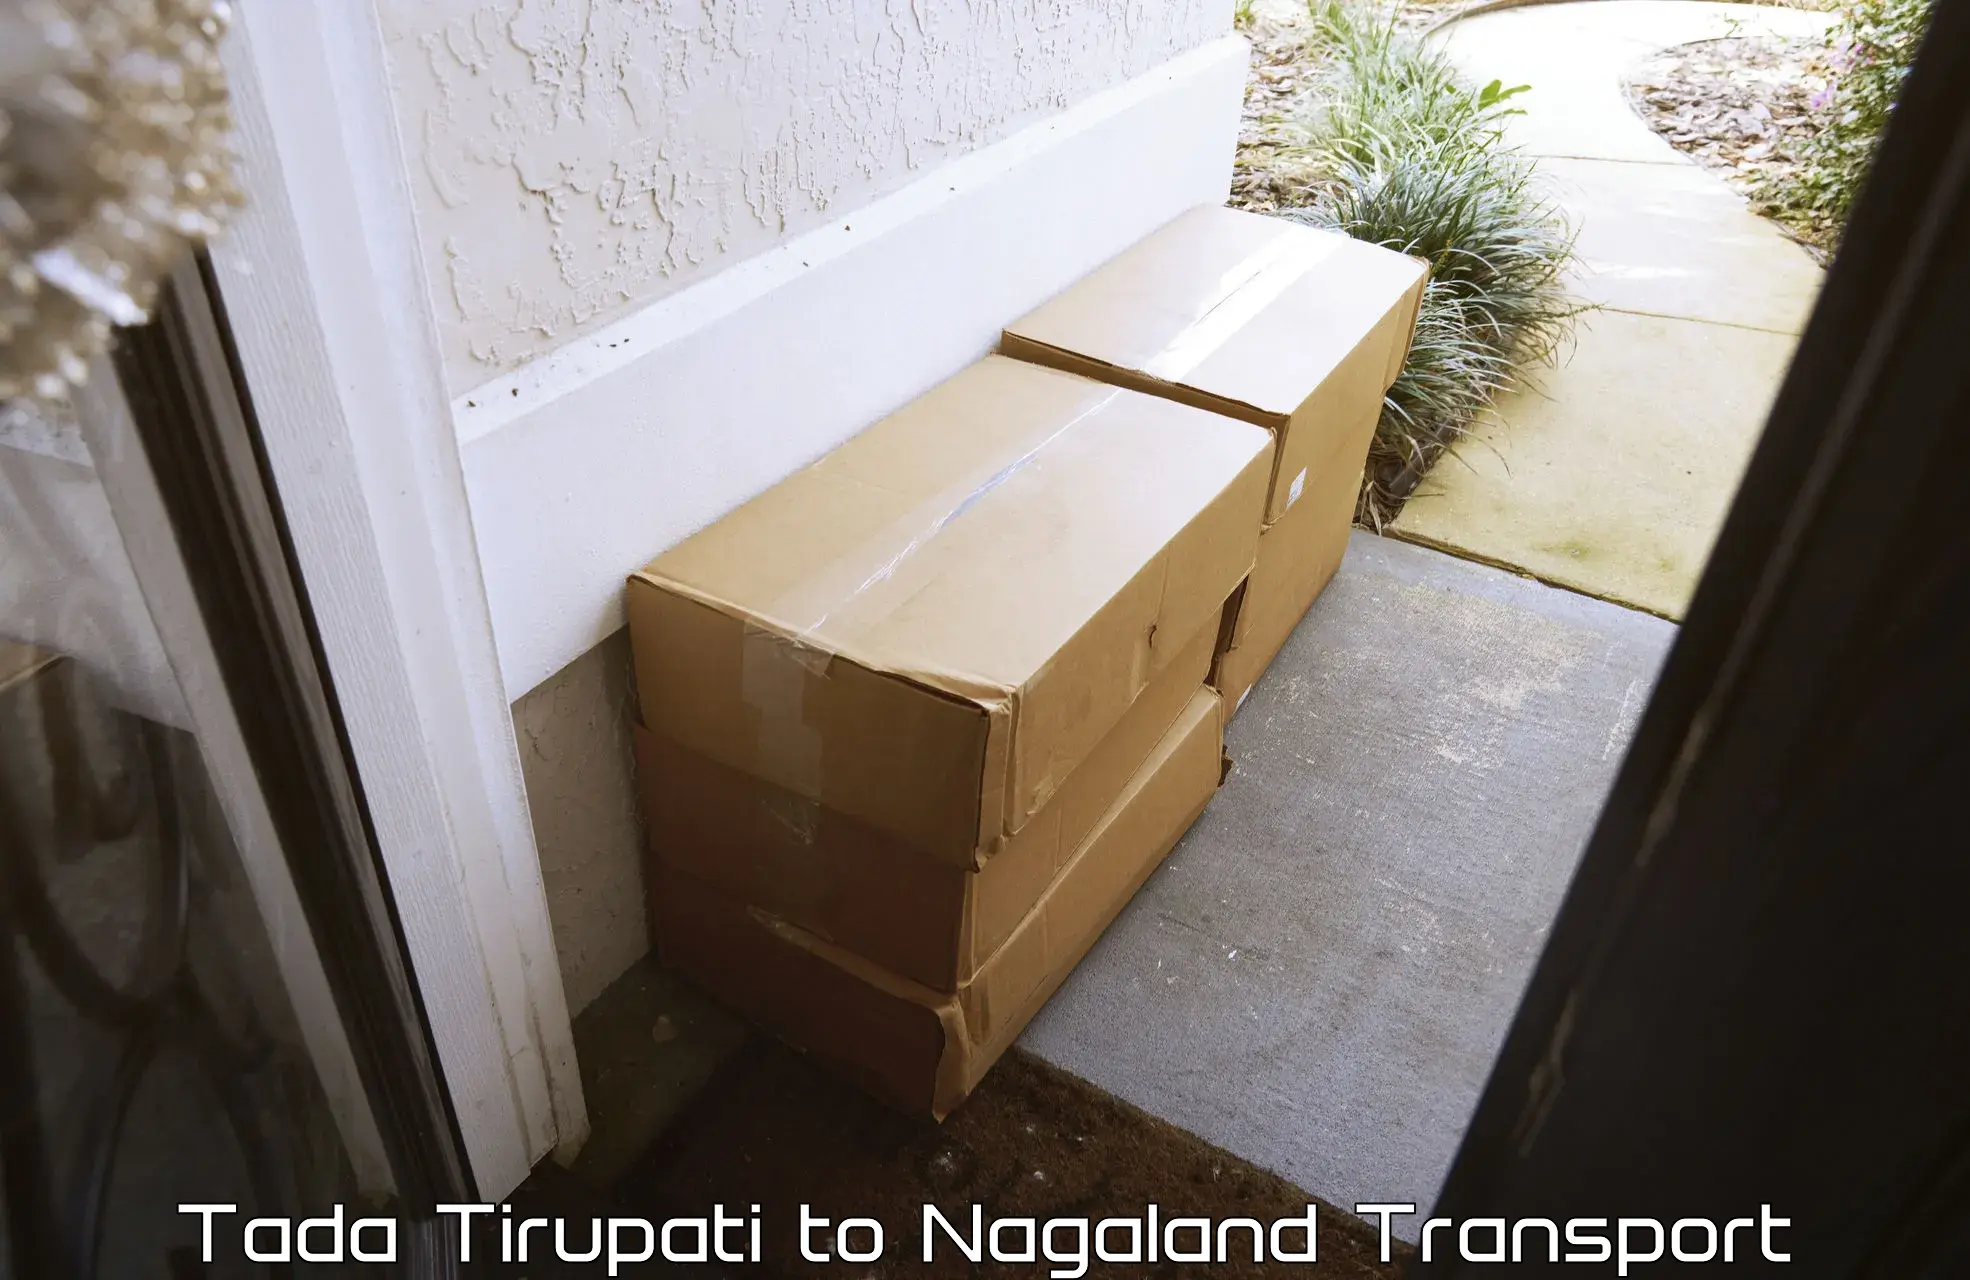 Daily transport service Tada Tirupati to Nagaland